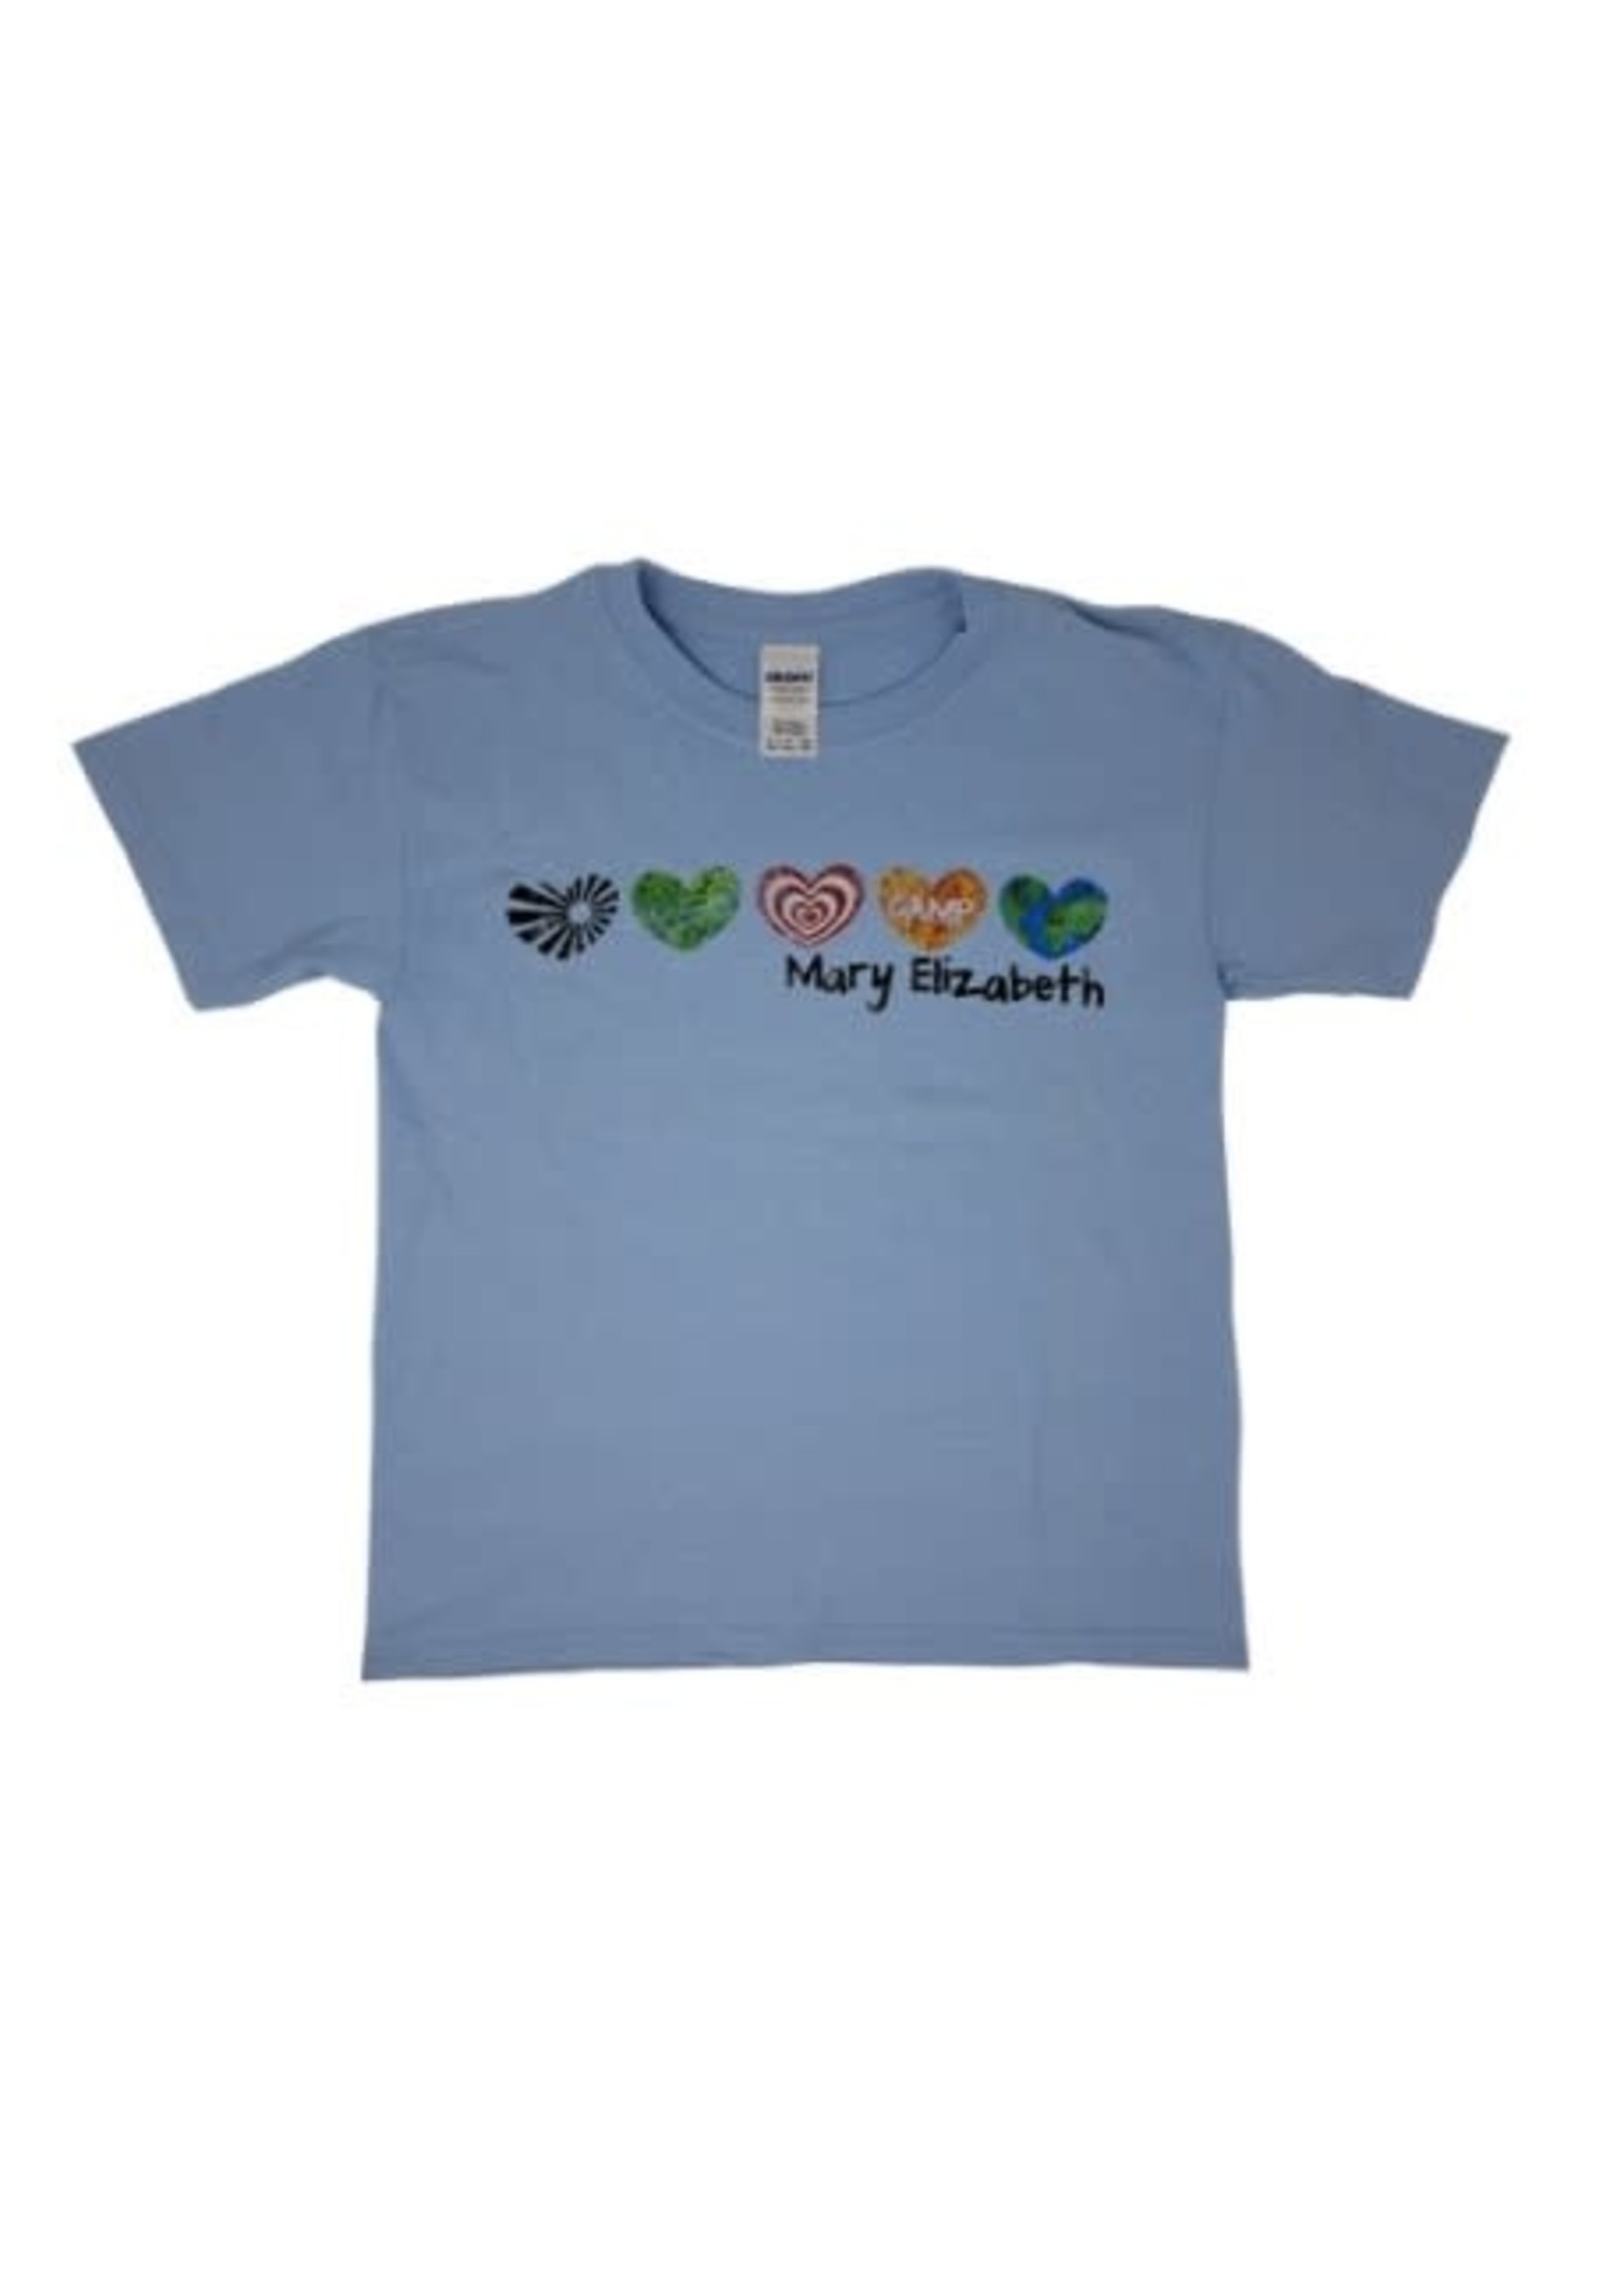 CME T-Shirt Blue w/ Hearts